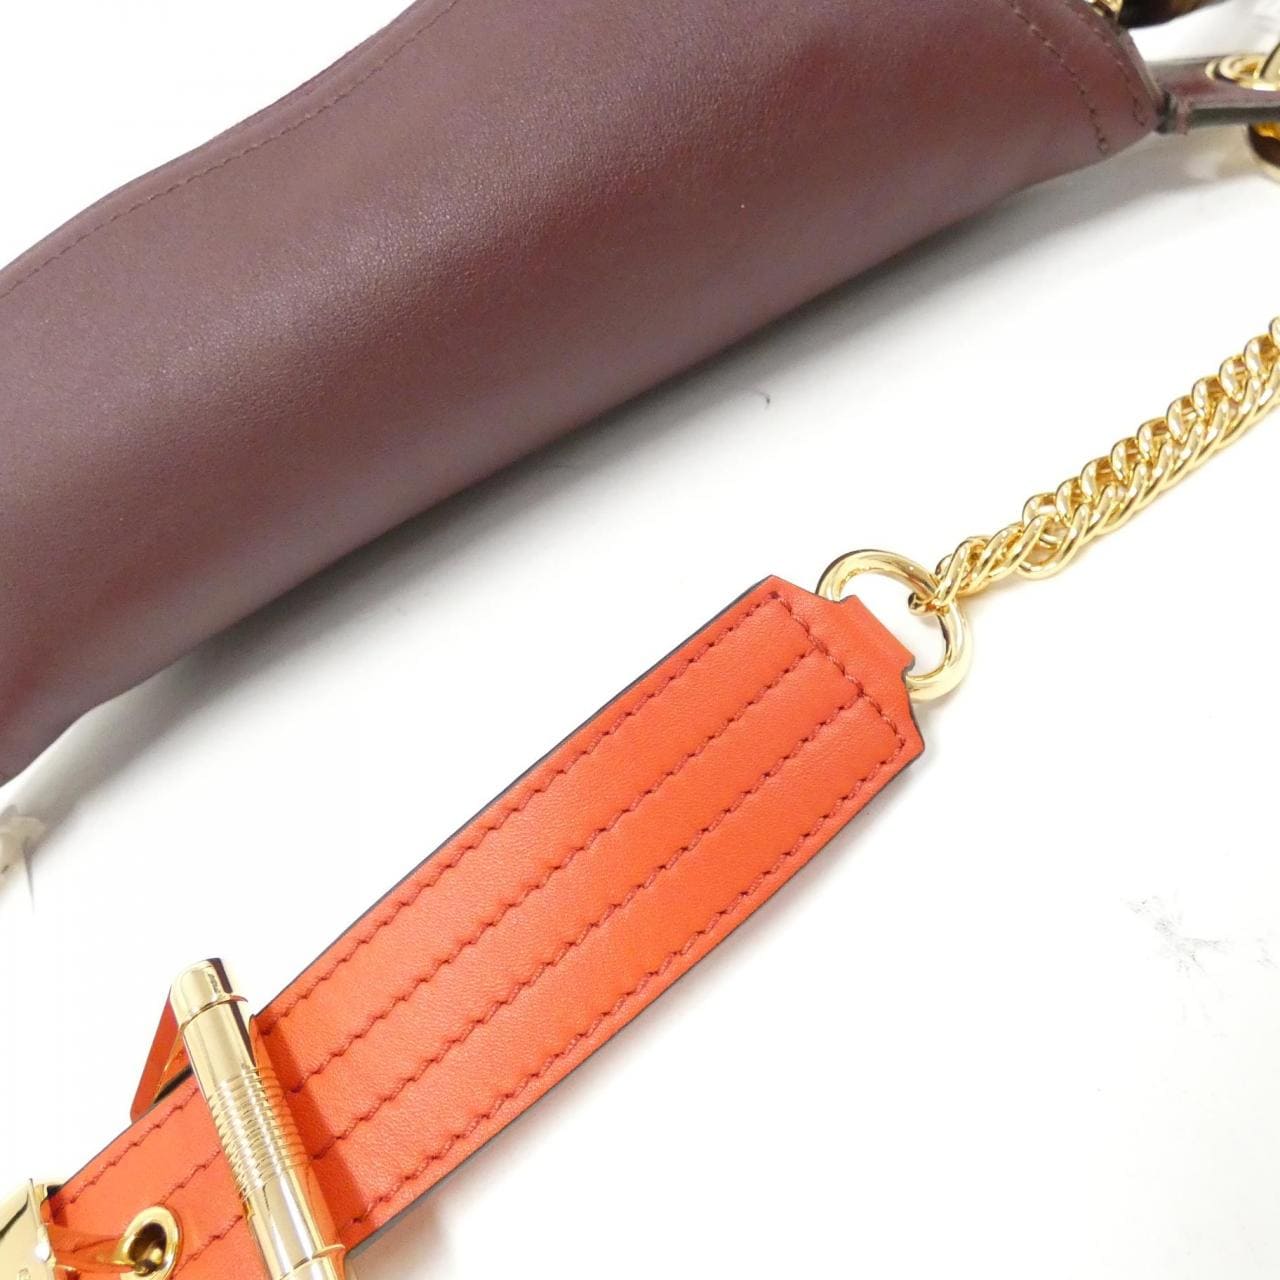 [BRAND NEW] GIVENCHY Whip Belt Bag BB509NB0ME Waist Bag